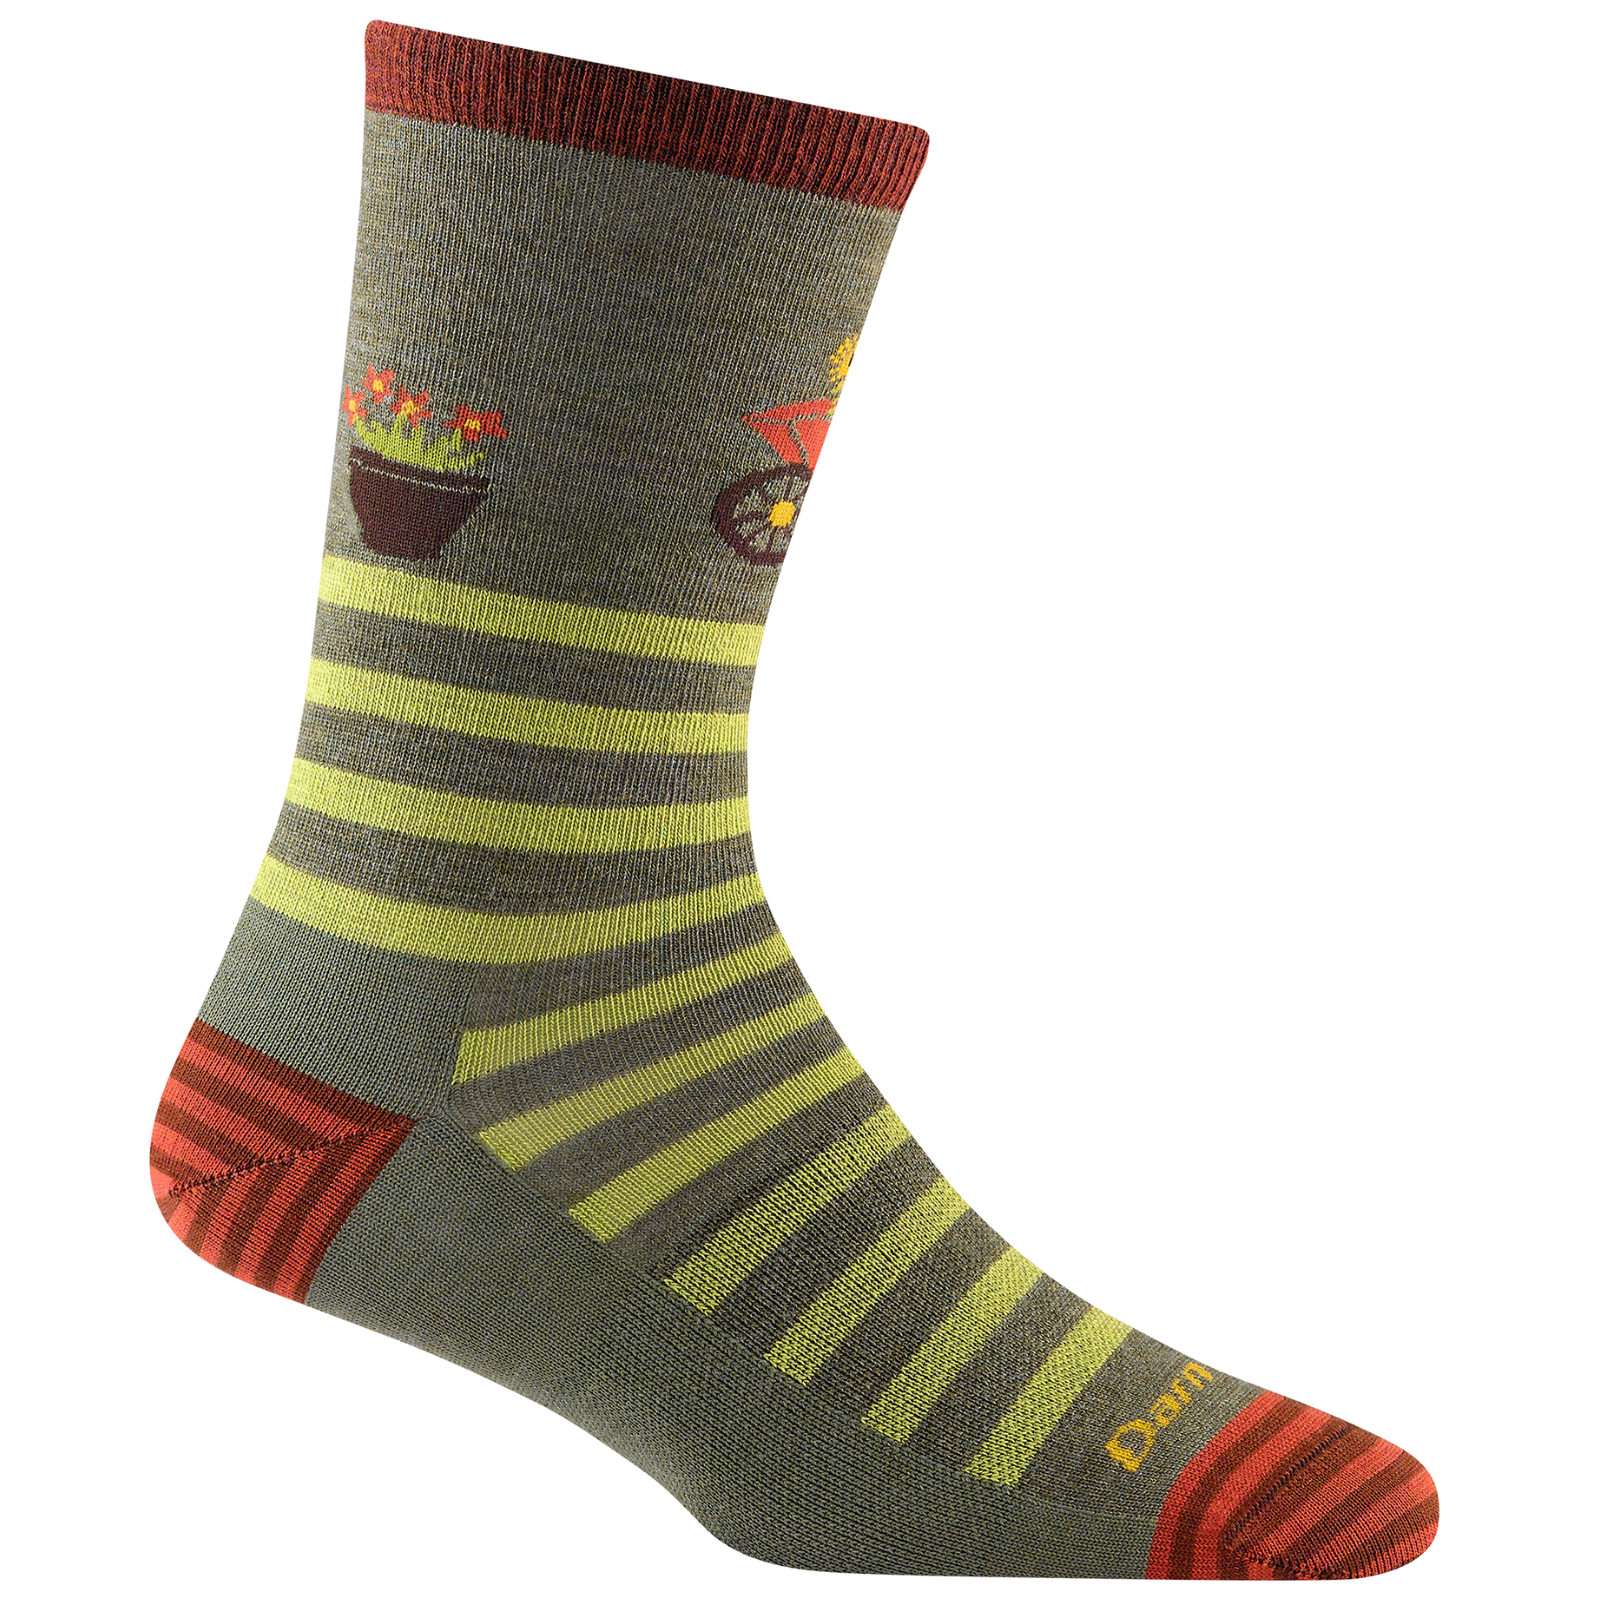 Darn Tough Socks  Lifetime Guarantee Socks With Merino Wool - Cute But  Crazy Socks